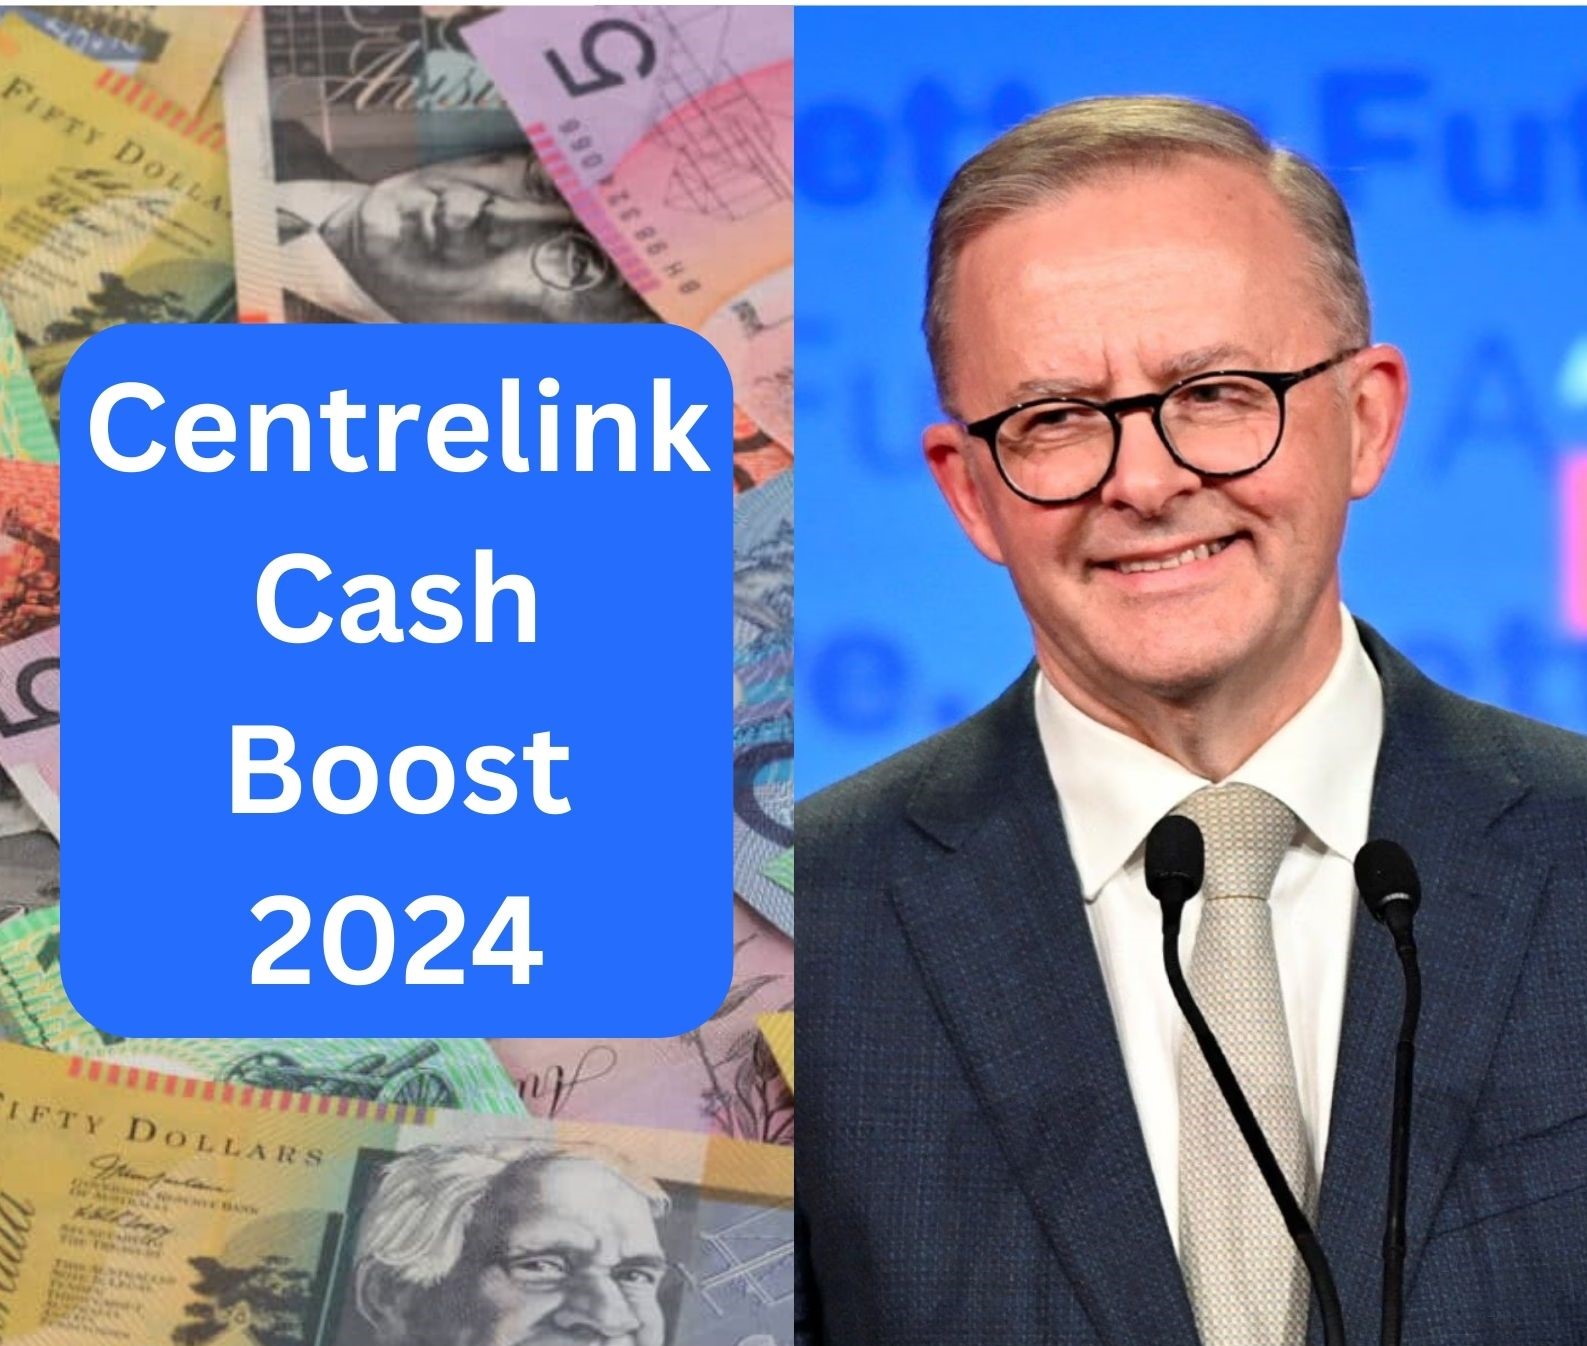 Centrelink Cash Boost 2024: A Lifeline for Australian Families